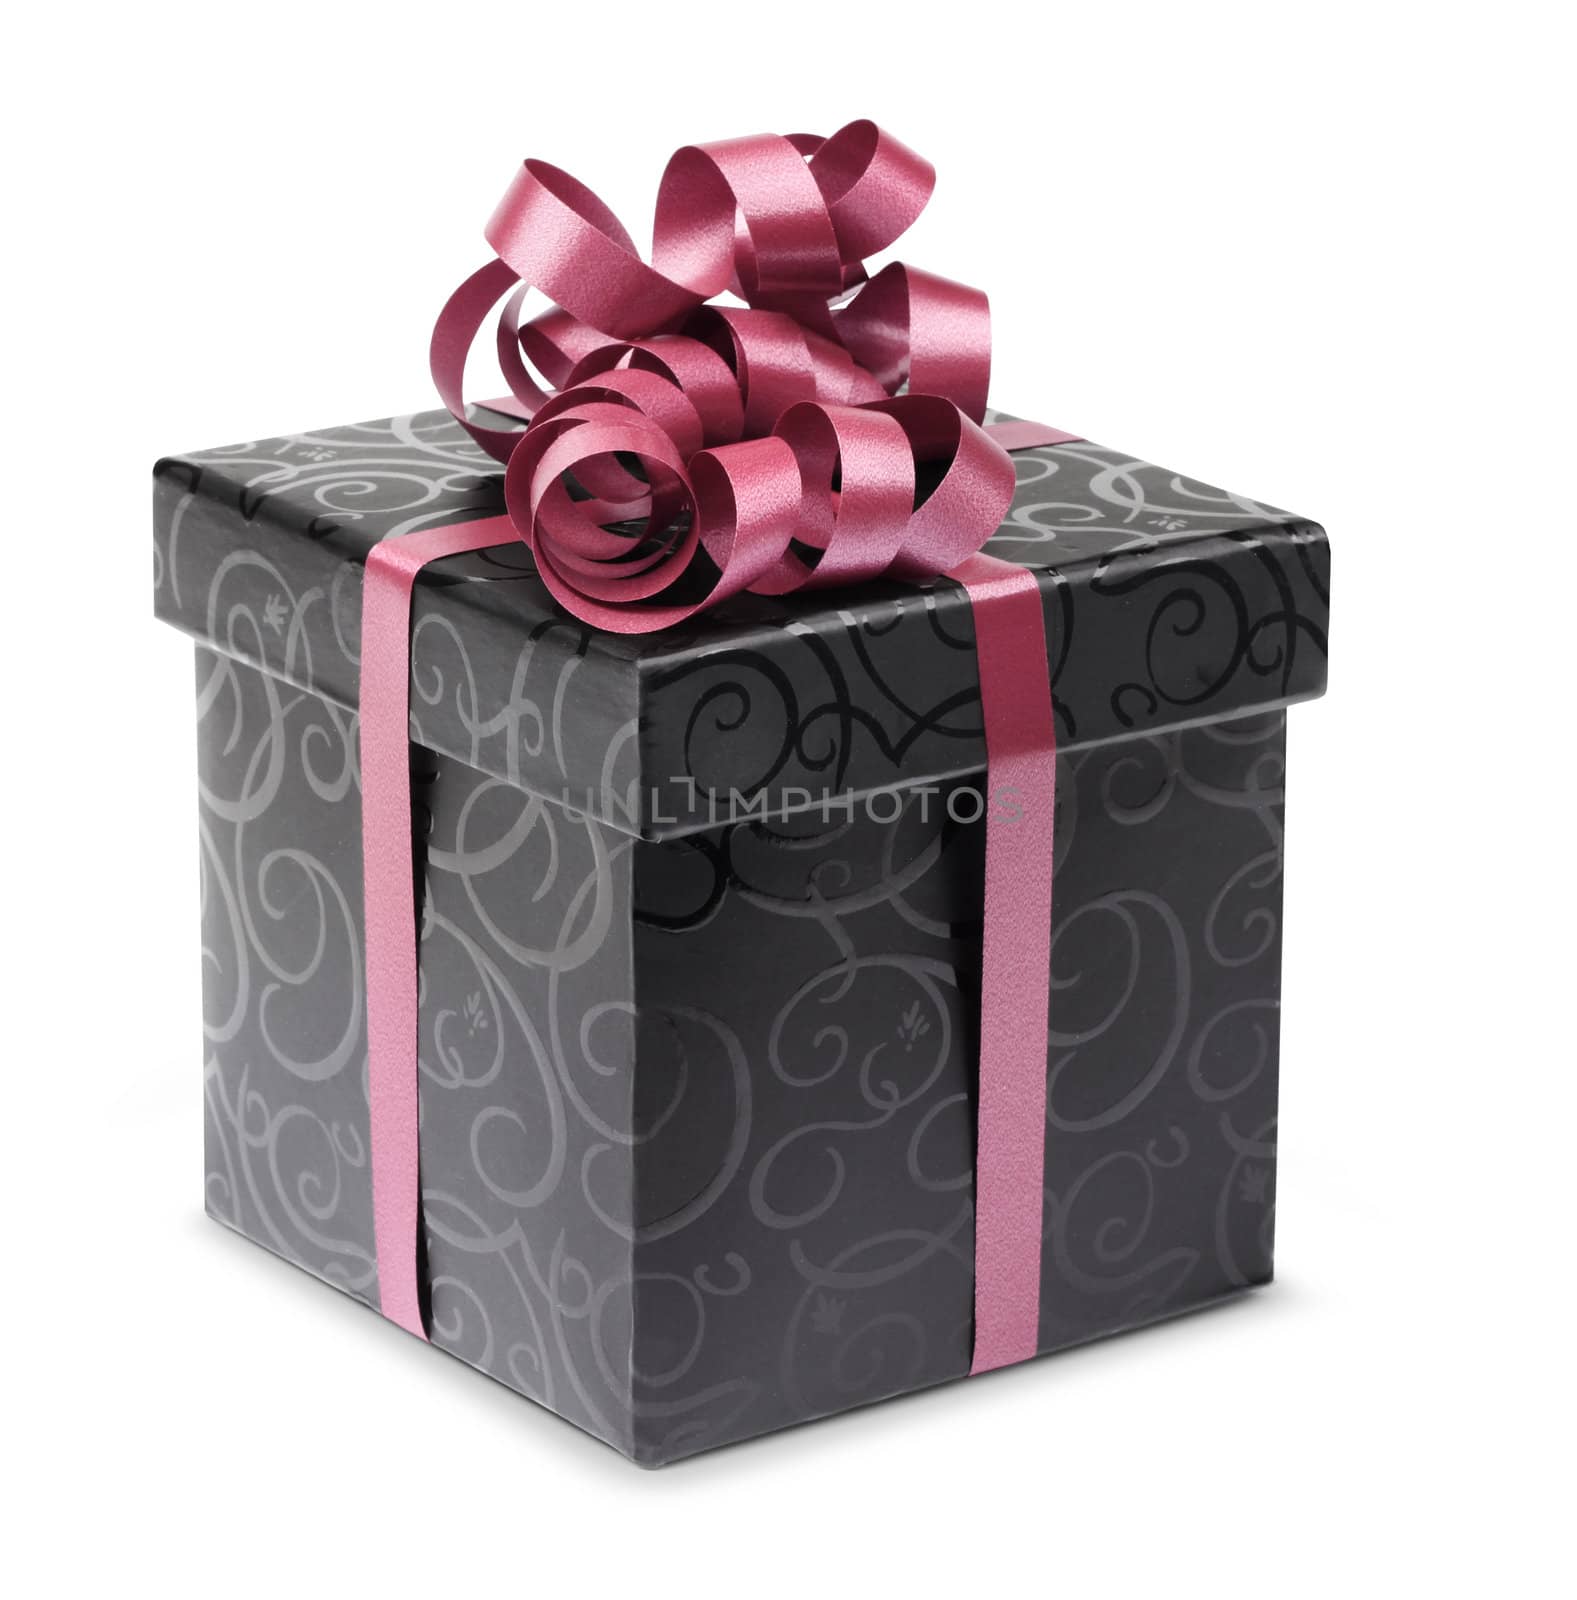 Stylish black present box by anterovium